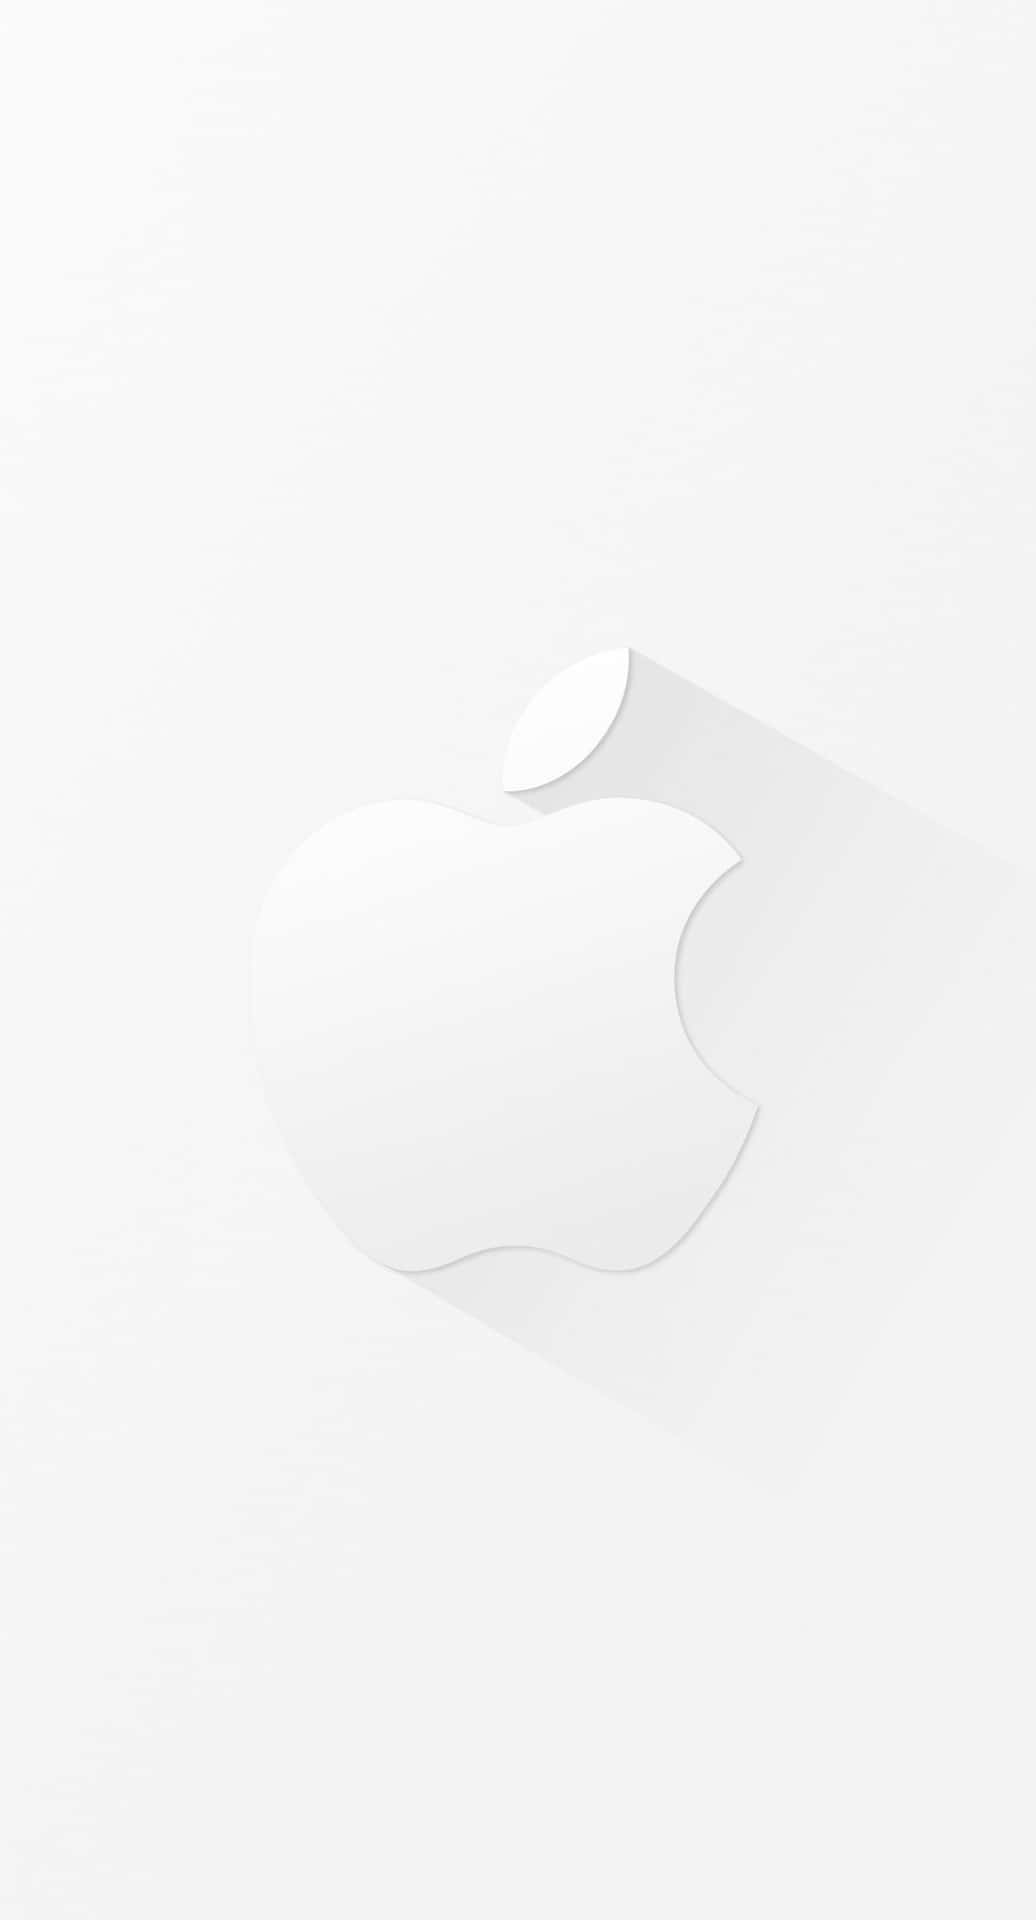 Free Apple Logo Iphone Wallpaper Downloads, [100+] Apple Logo Iphone  Wallpapers for FREE 